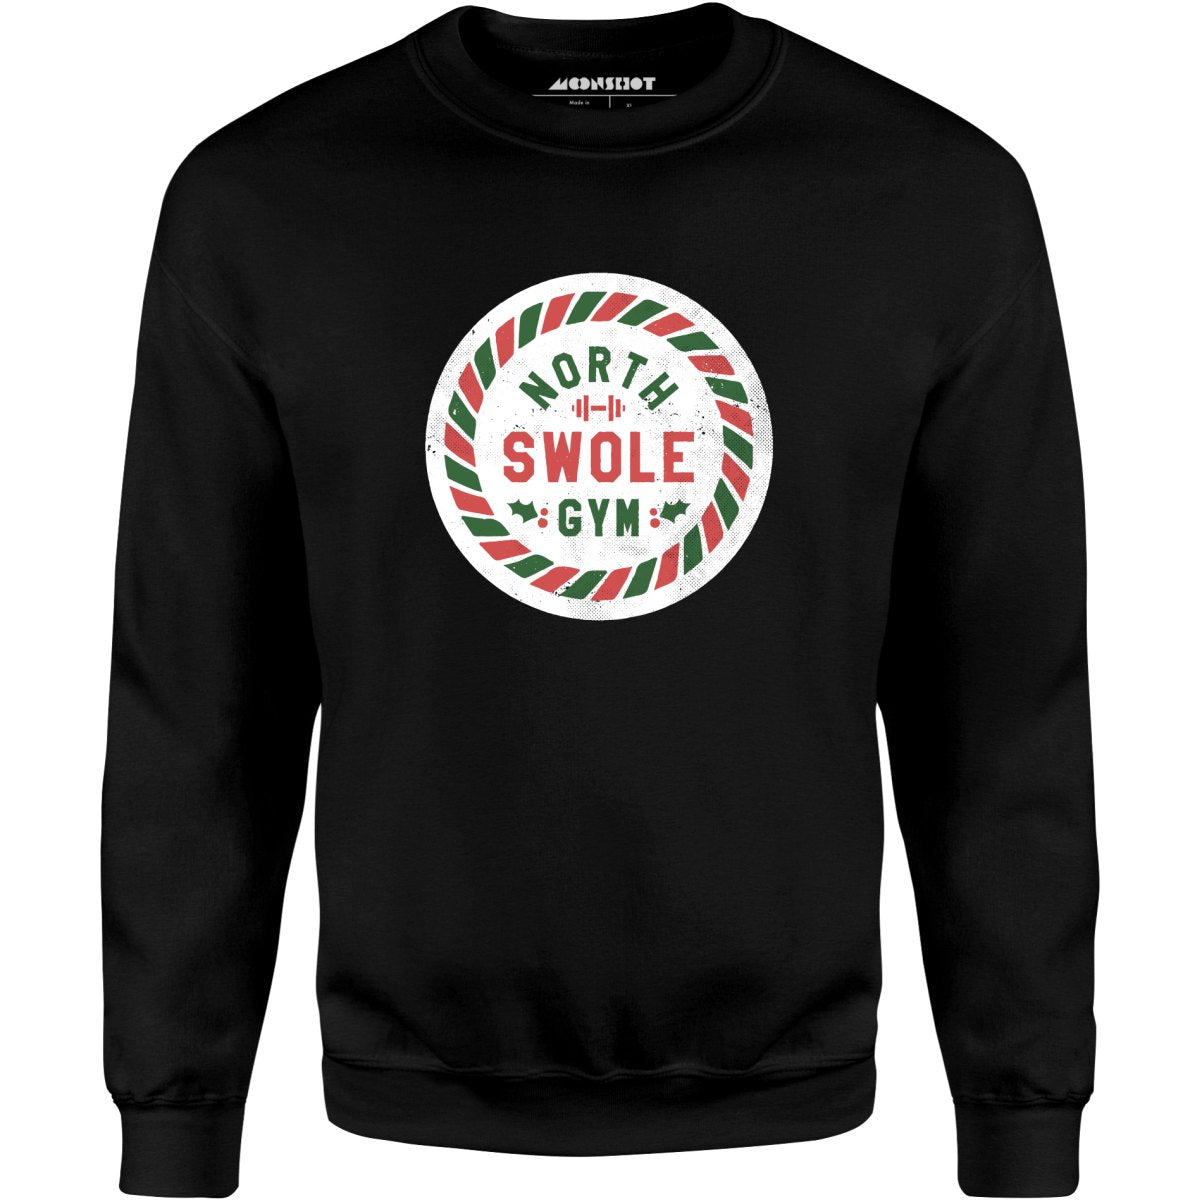 North Swole Gym - Unisex Sweatshirt